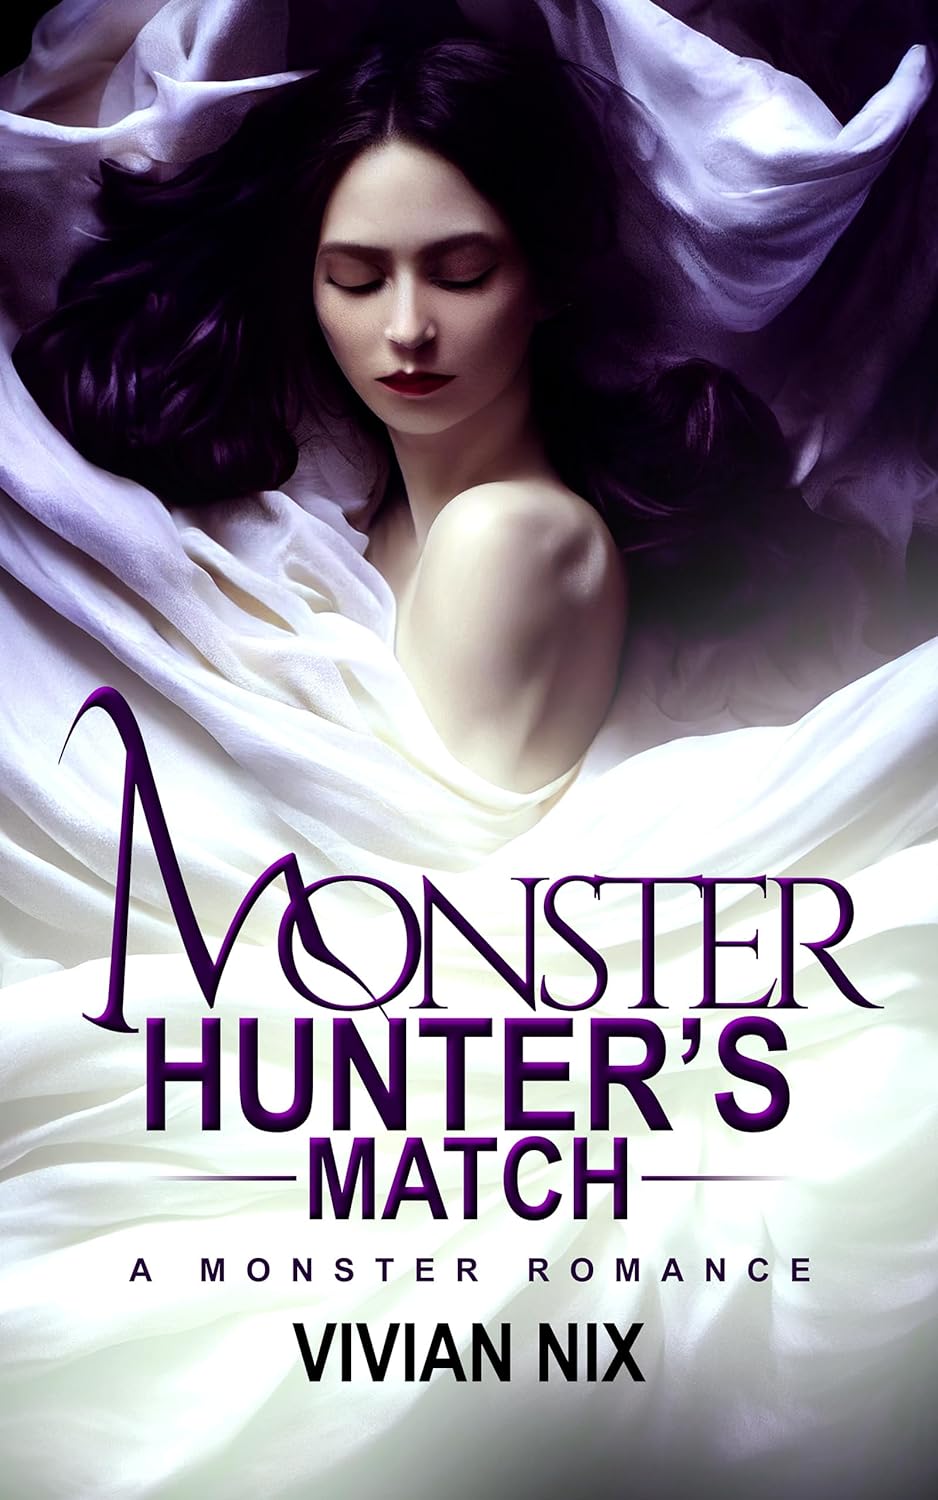 Monster Hunter’s Match by Vivian Nix